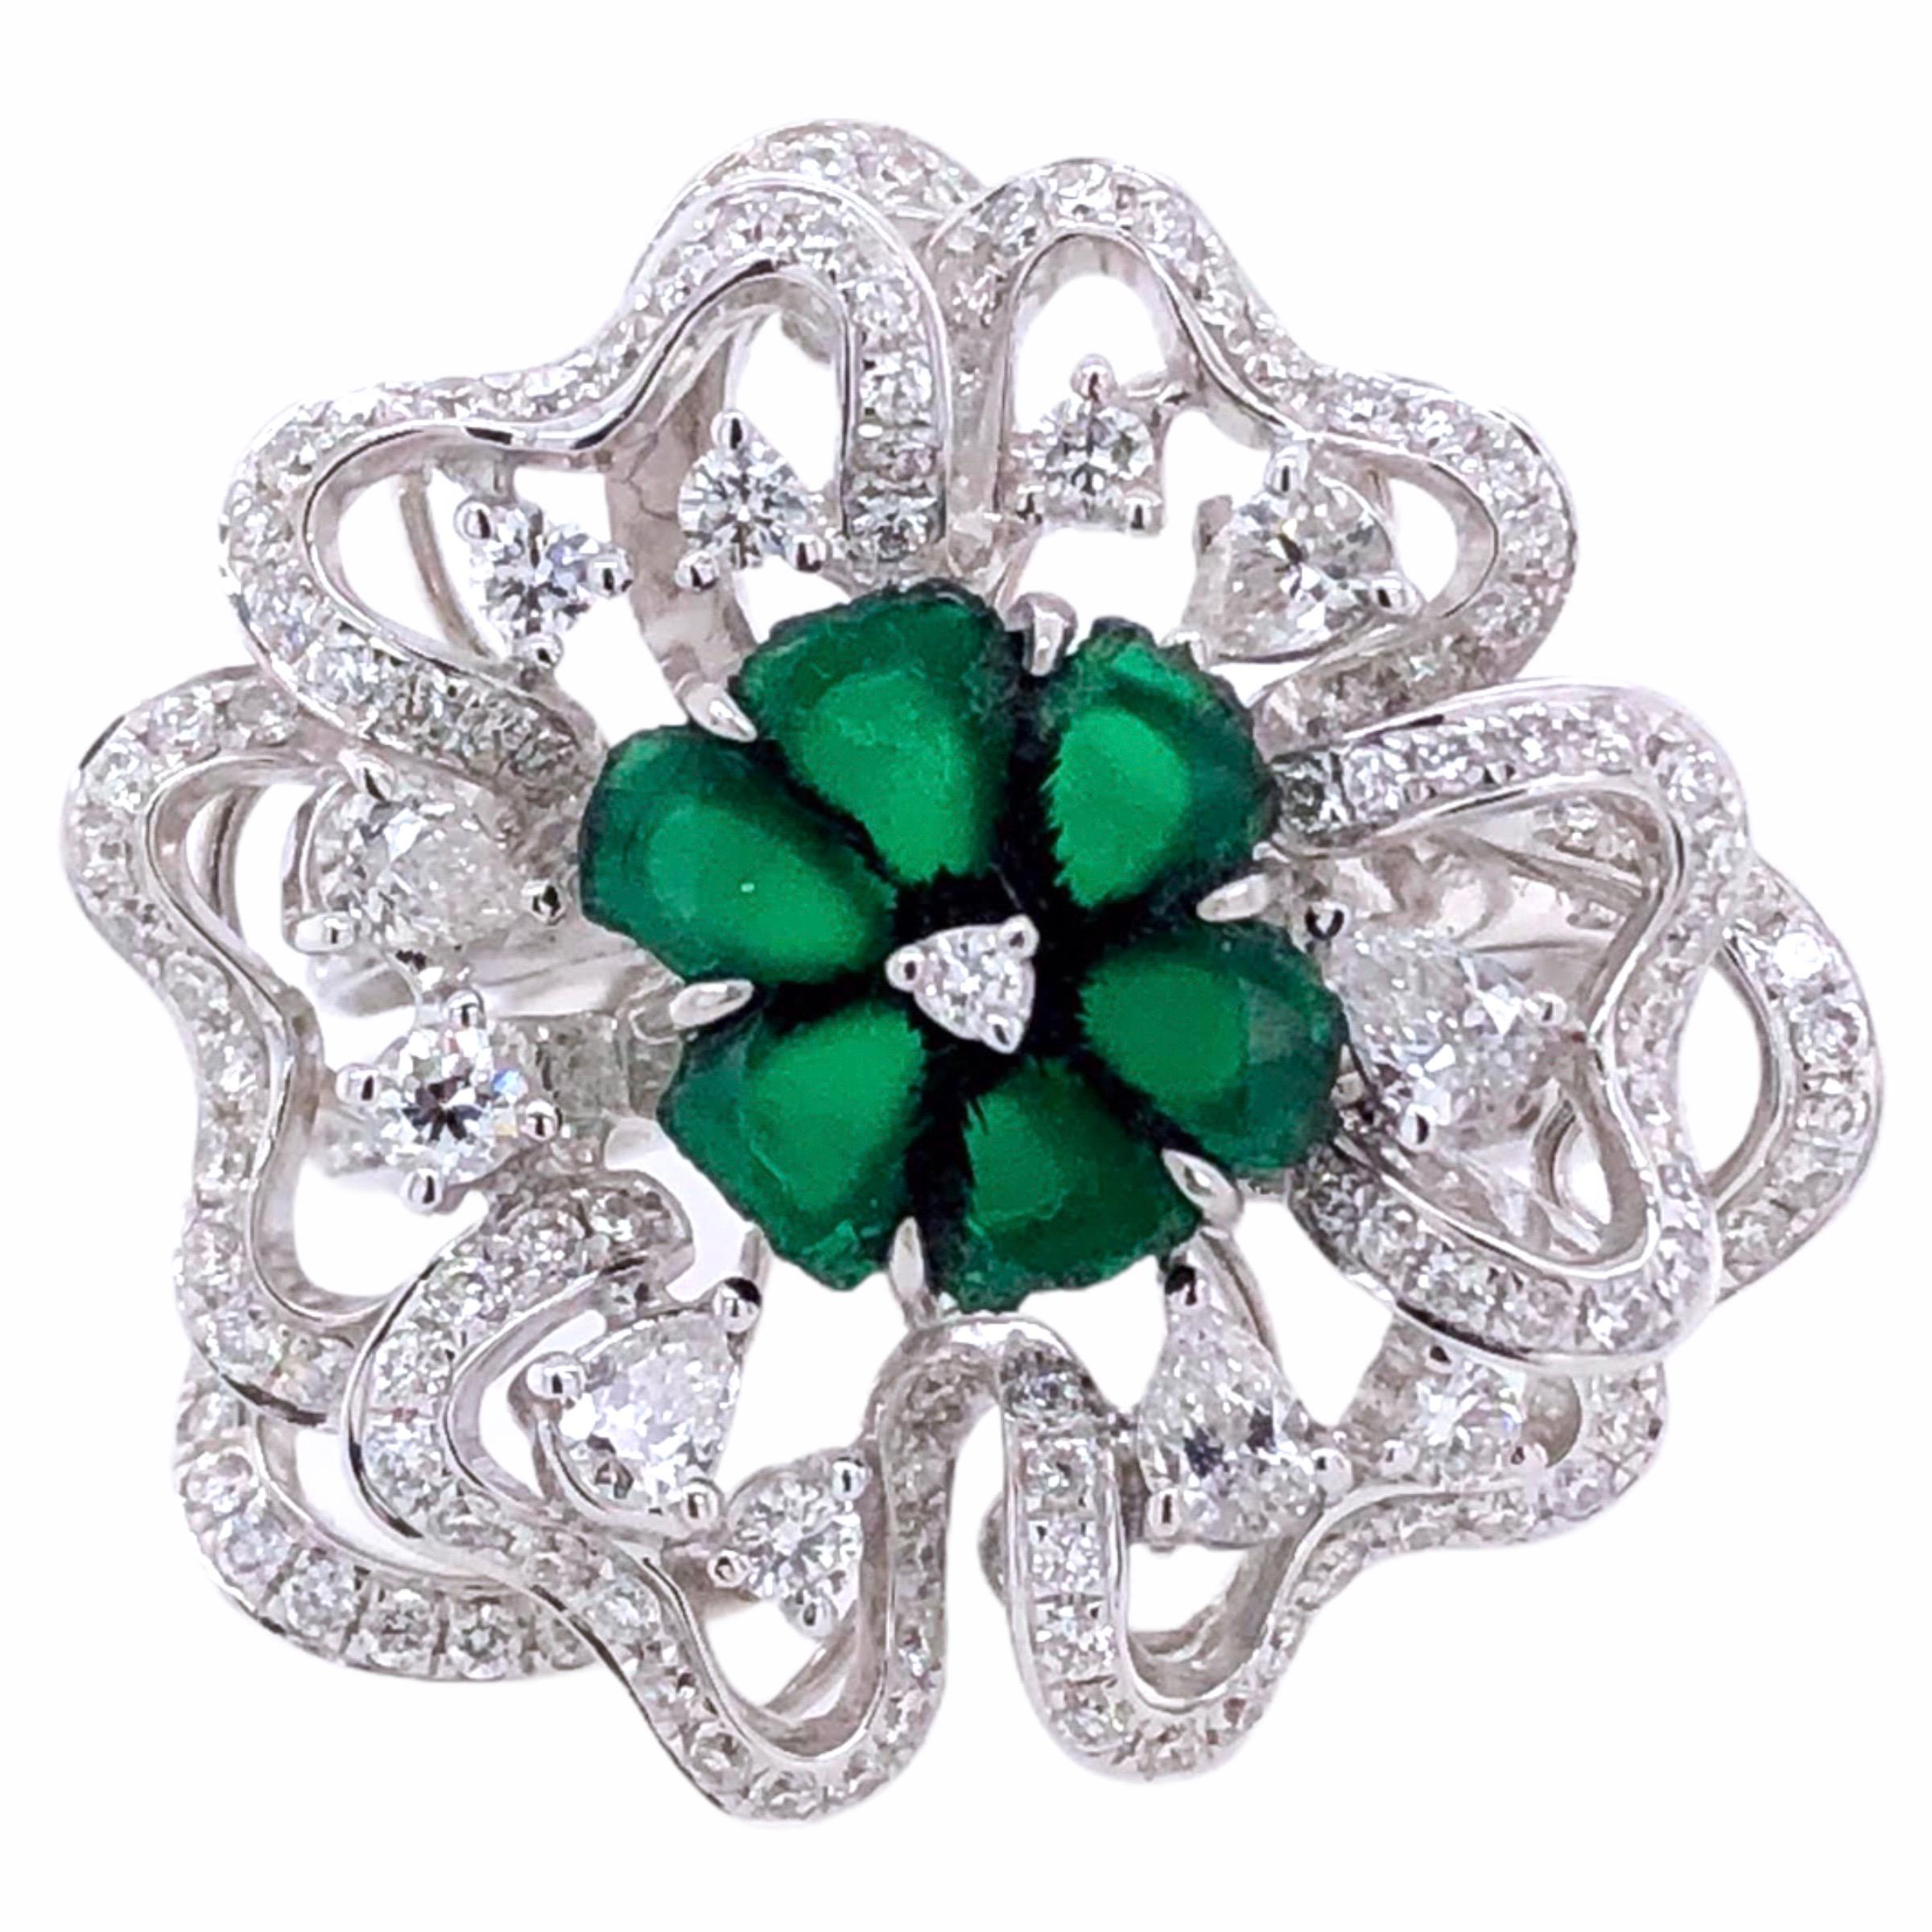 PARIS Craft House 1.87ct Rough-cut Emerald Diamond Flower Cocktail Ring in 18 Karat White Gold.

- 1 Rough-cut Emerald/1.87ct
- 5 Pear-cut Diamonds/0.32ct
- 159 Round Diamonds/0.97ct
- 6 Round Diamonds/0.17ct
- 18K White Gold/11.29g
- Size of ring